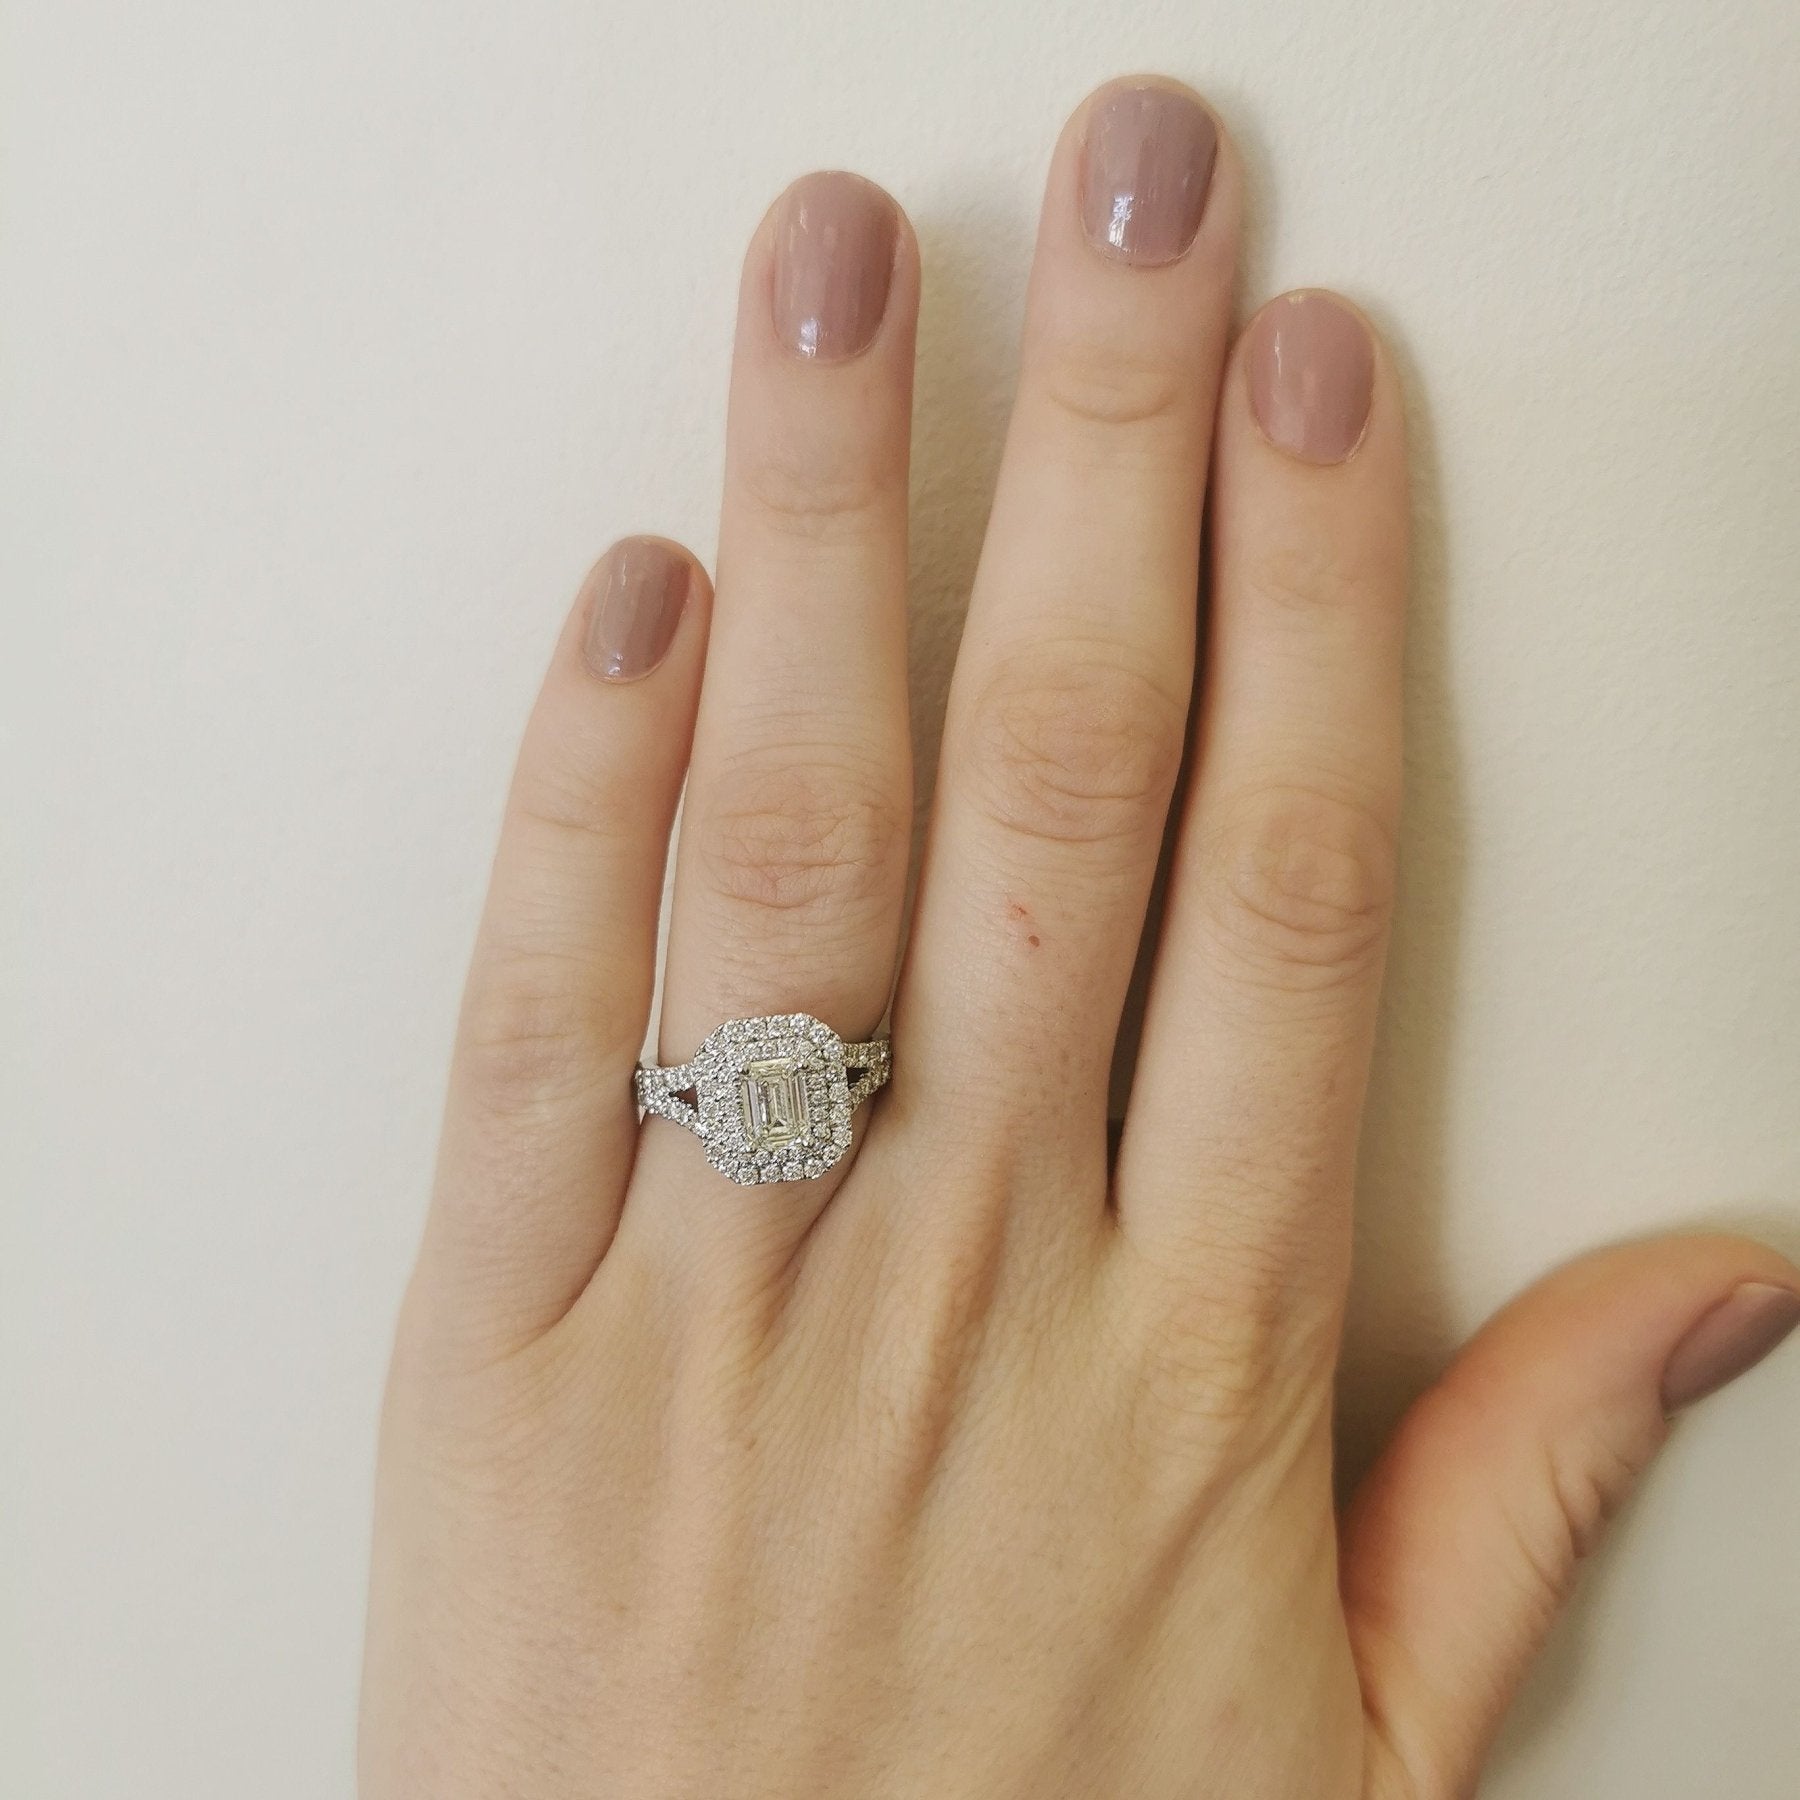 'Vera Wang' Emerald Cut Double Halo Diamond Engagement Ring | 0.04ctw, 1.82ctw | SZ 6.5 | - 100 Ways